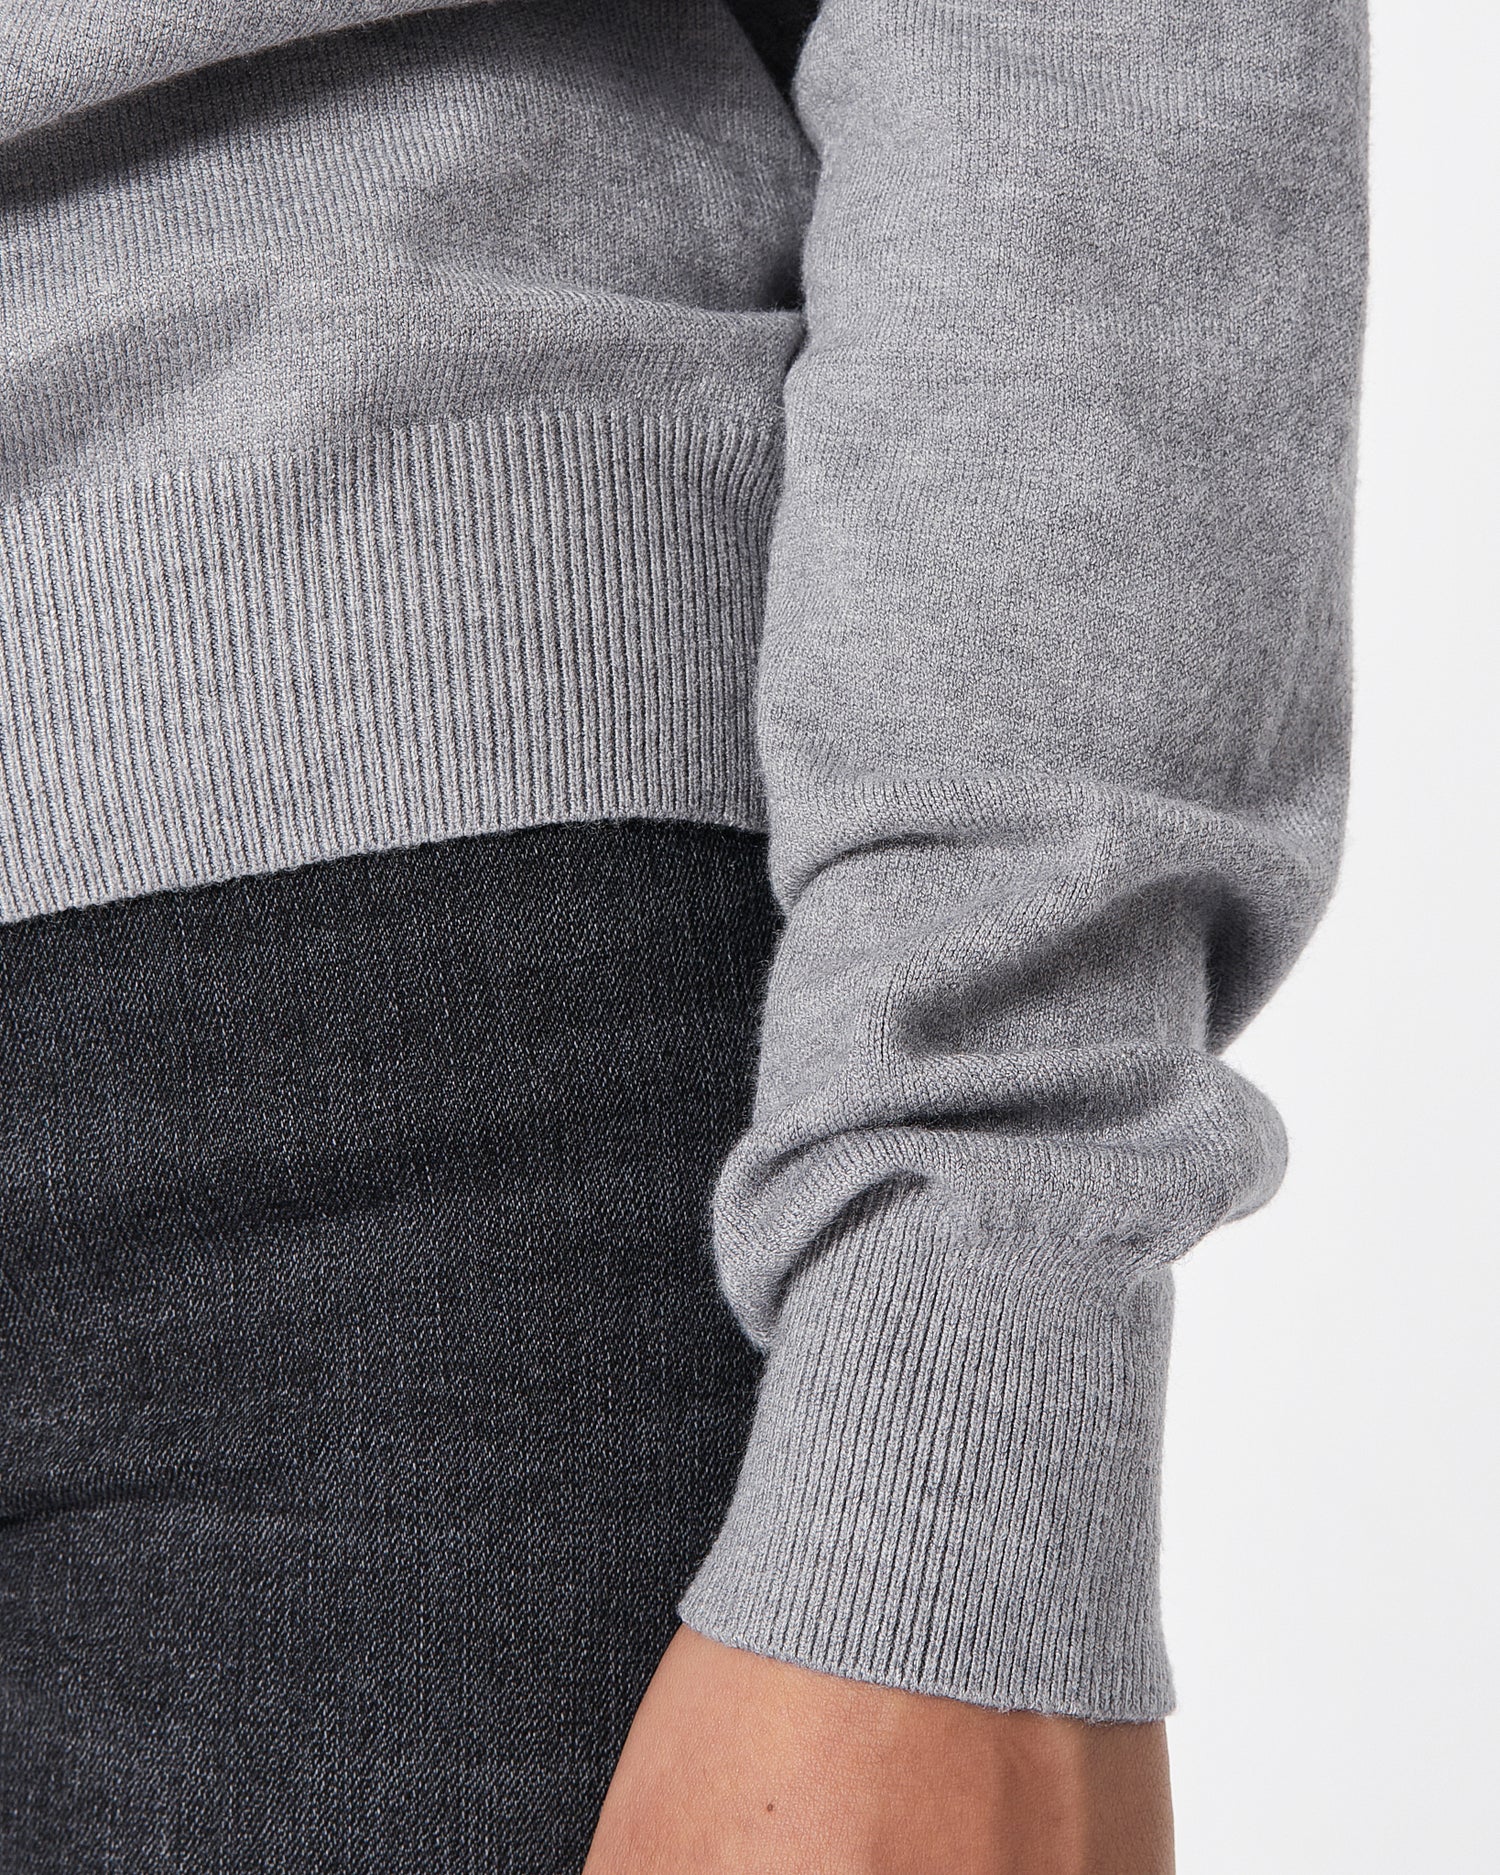 Plain Color Lady Soft Knit Grey Cardigan 18.90